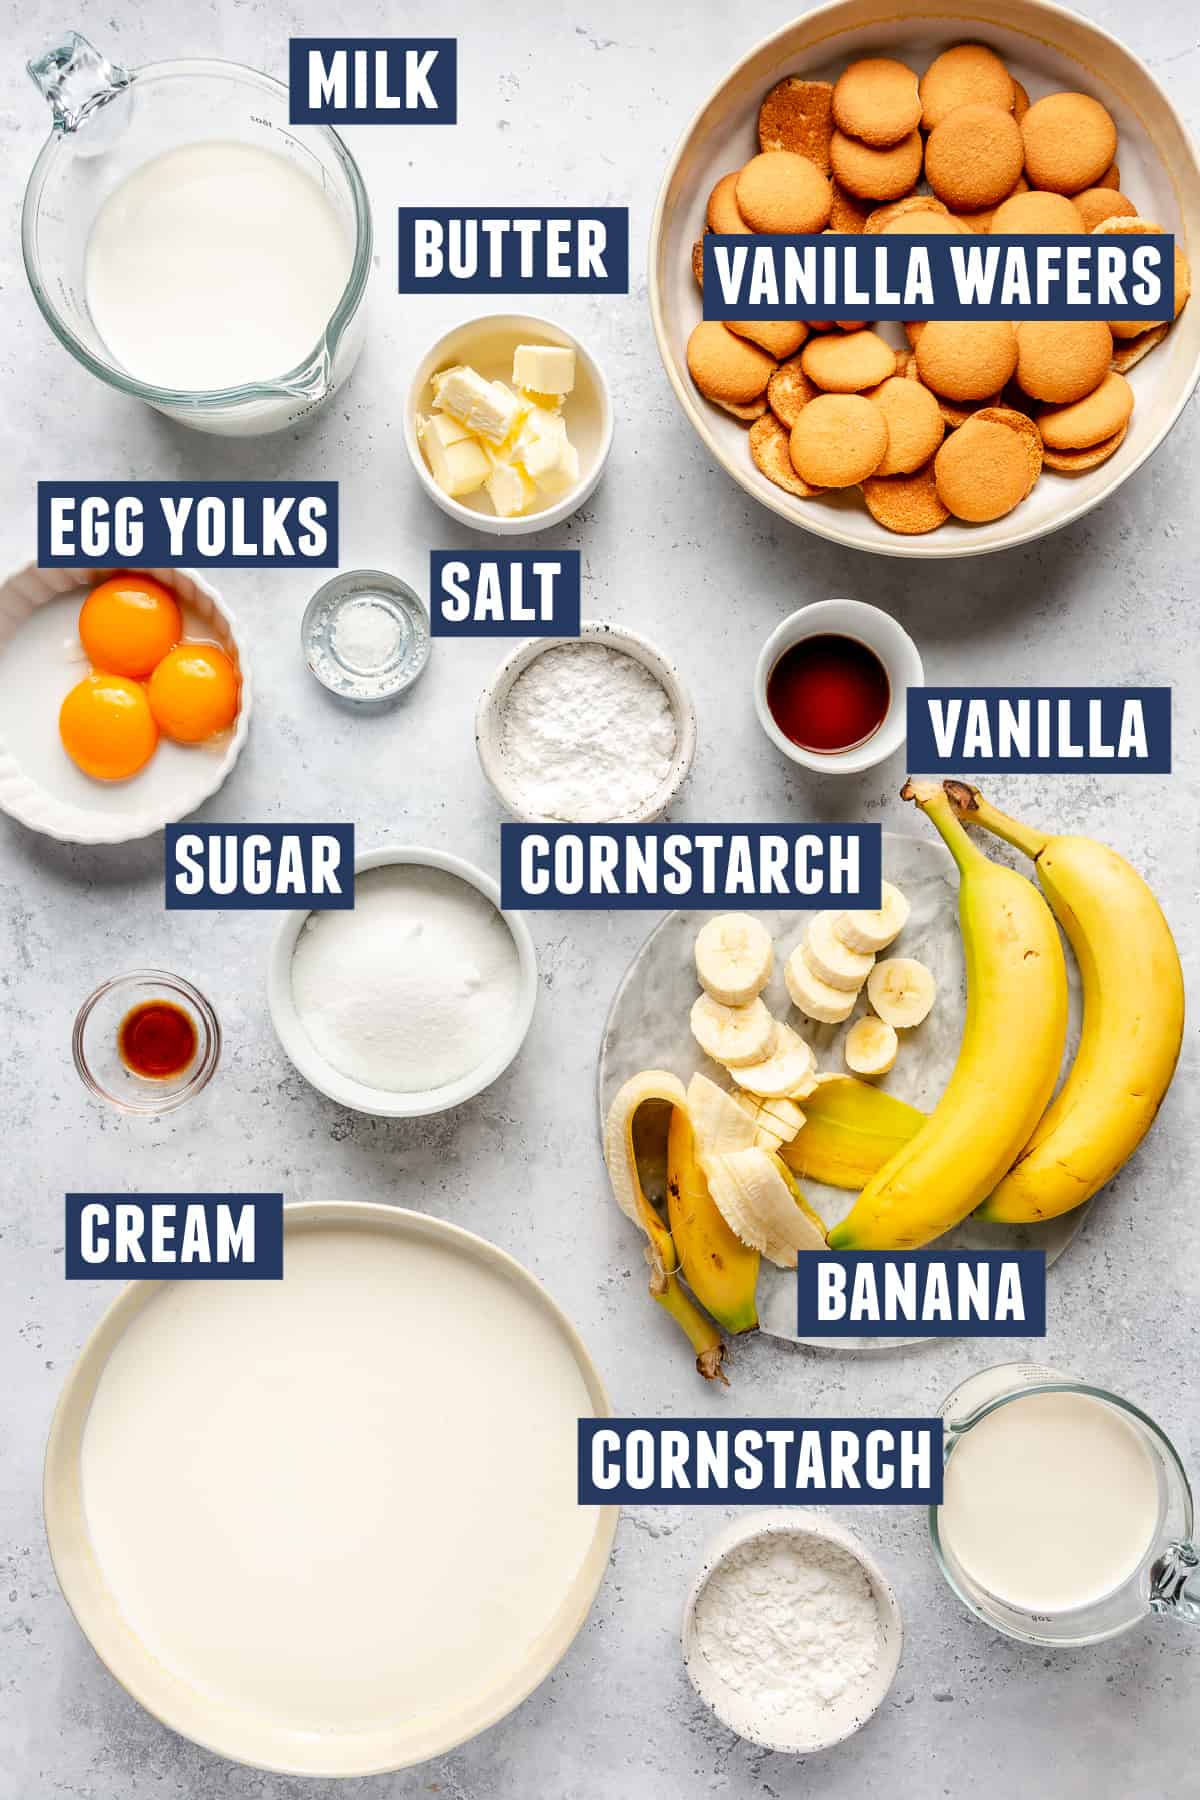 Ingredients needed to make homemade banana pudding.